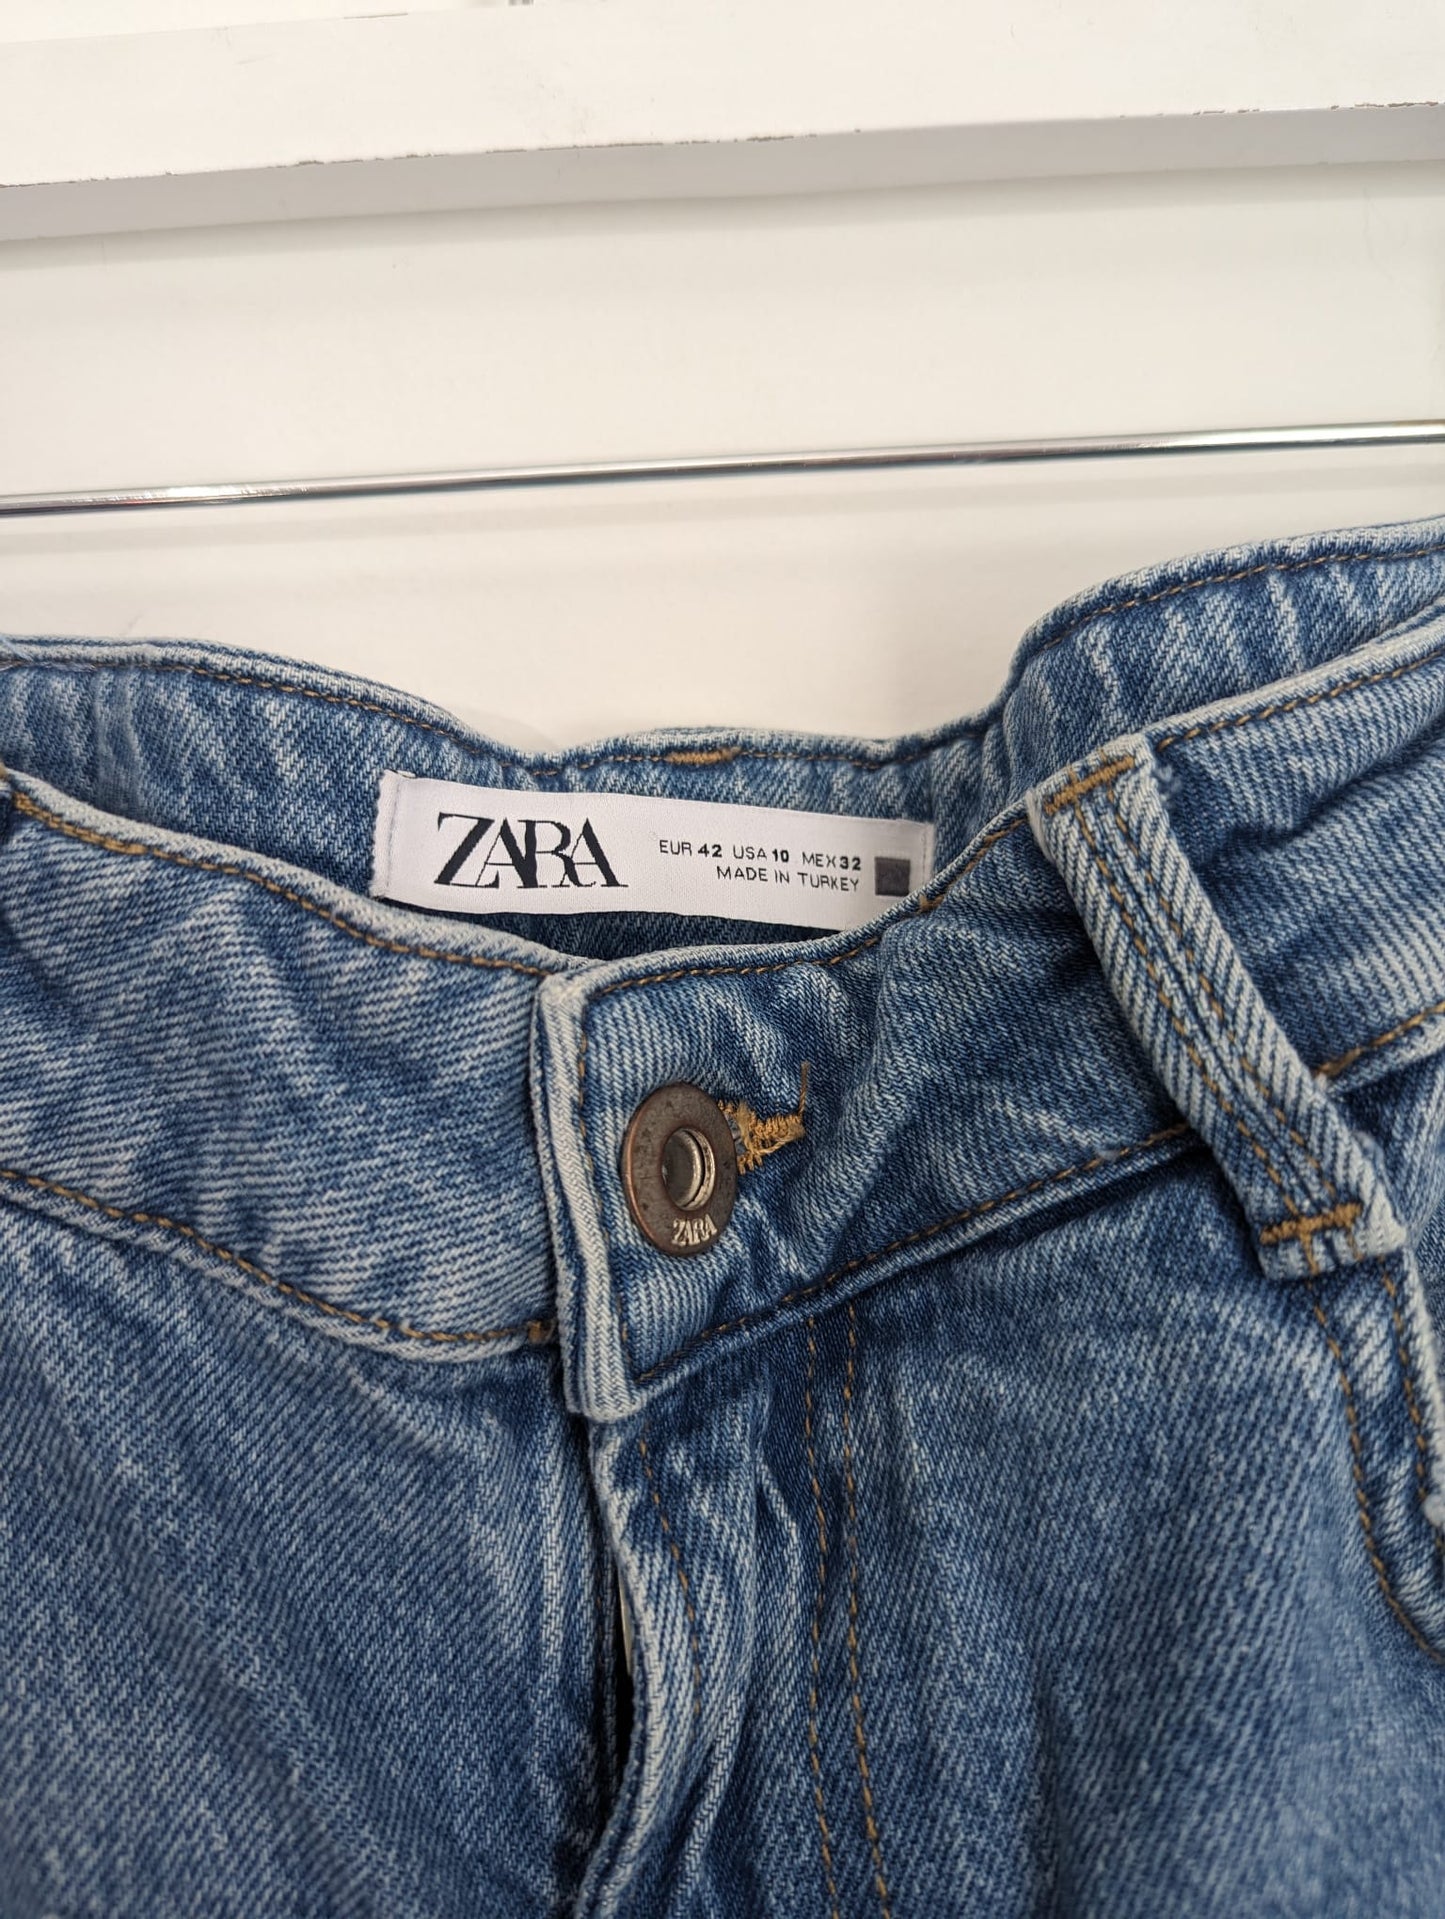 Zara Light Wash Straight Jeans - Size 10